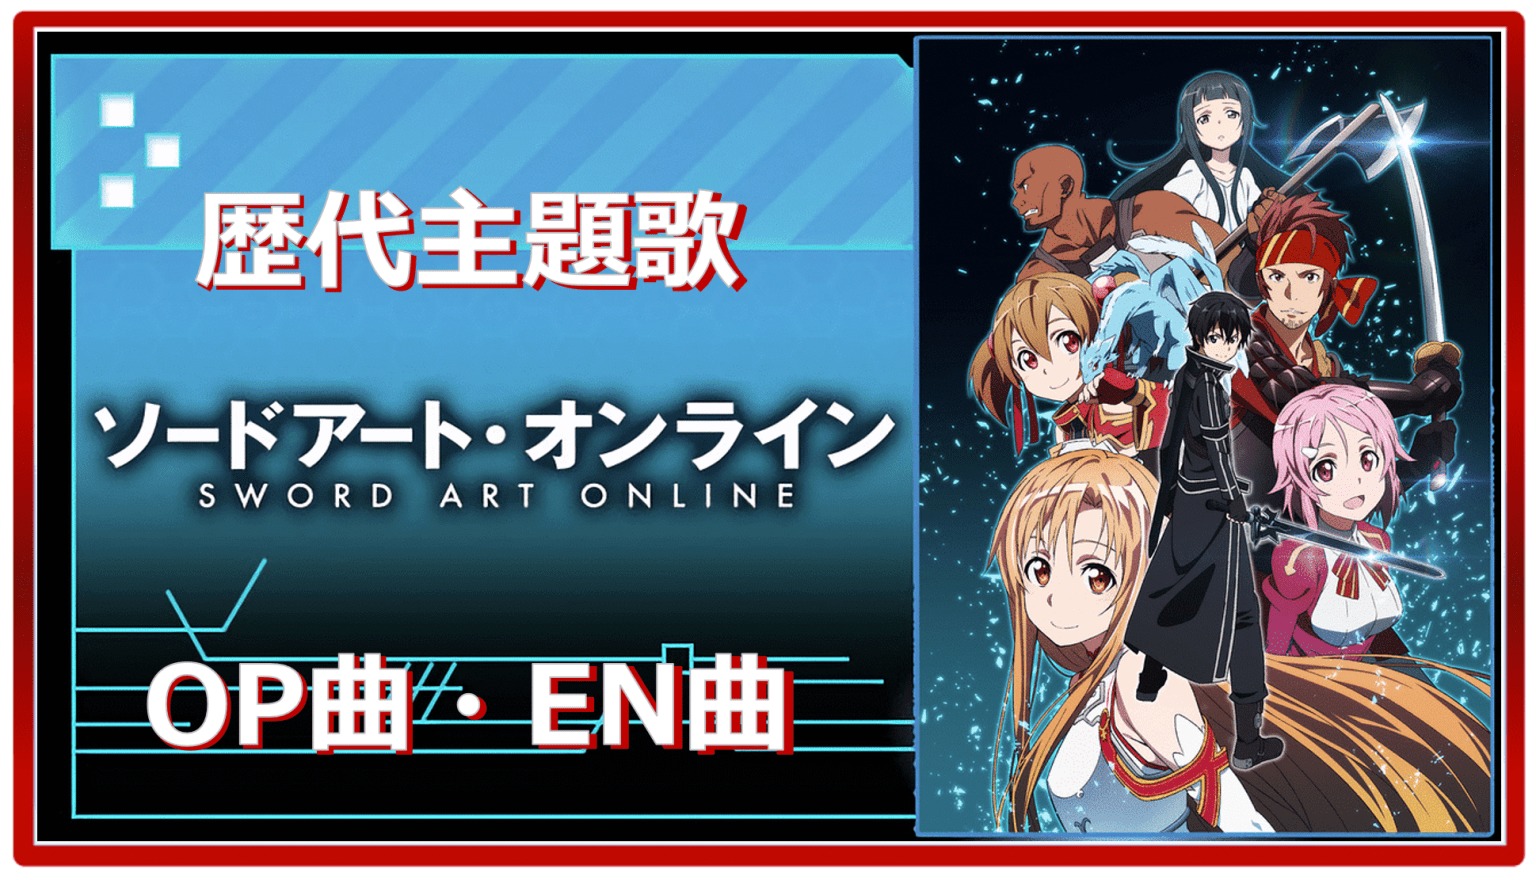 Sword Art Online Past Anime Theme Song Op En All 19 Songs Summary アニメソングライブラリー